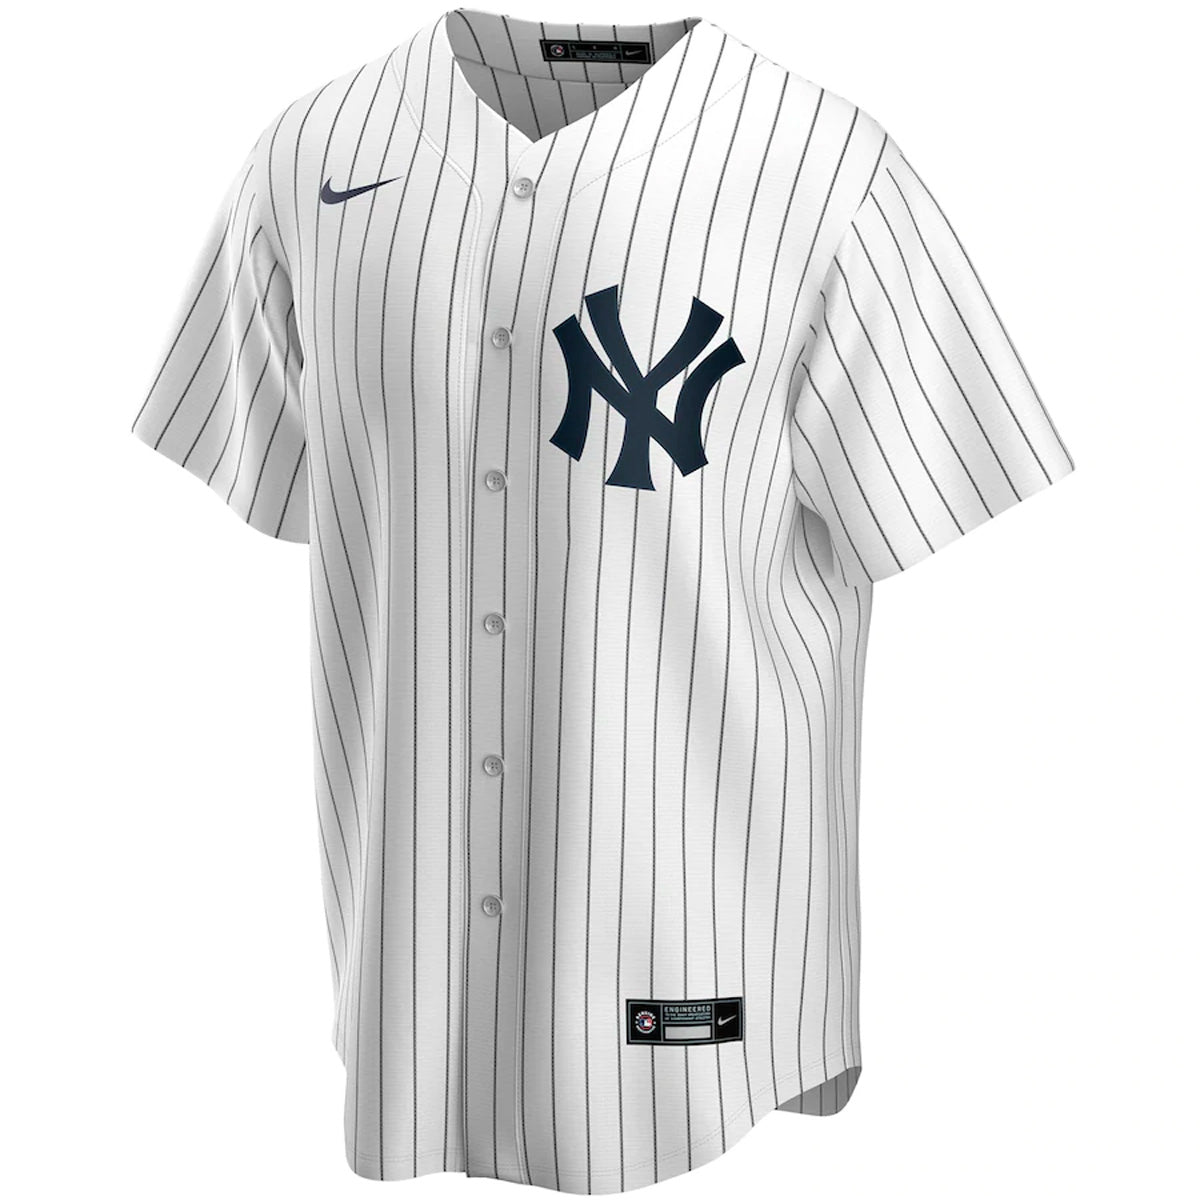 Aaron Judge New York Yankees Nike Pitch Black Fashion Replica Player Jersey  - Black